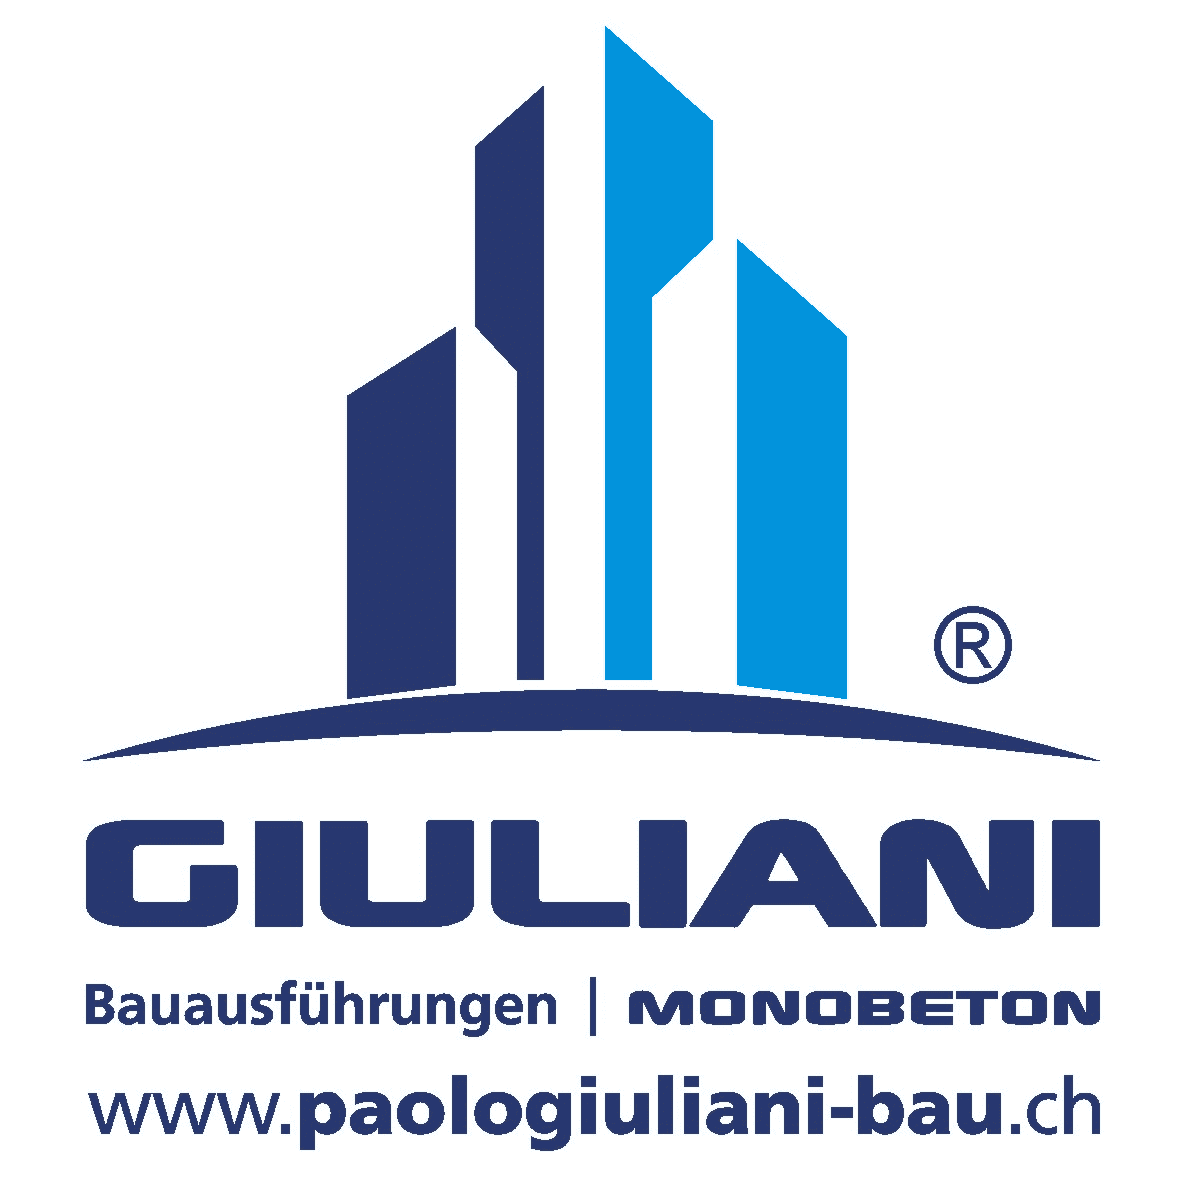 Giuliani Bauausführungen + Monobeton GmbH